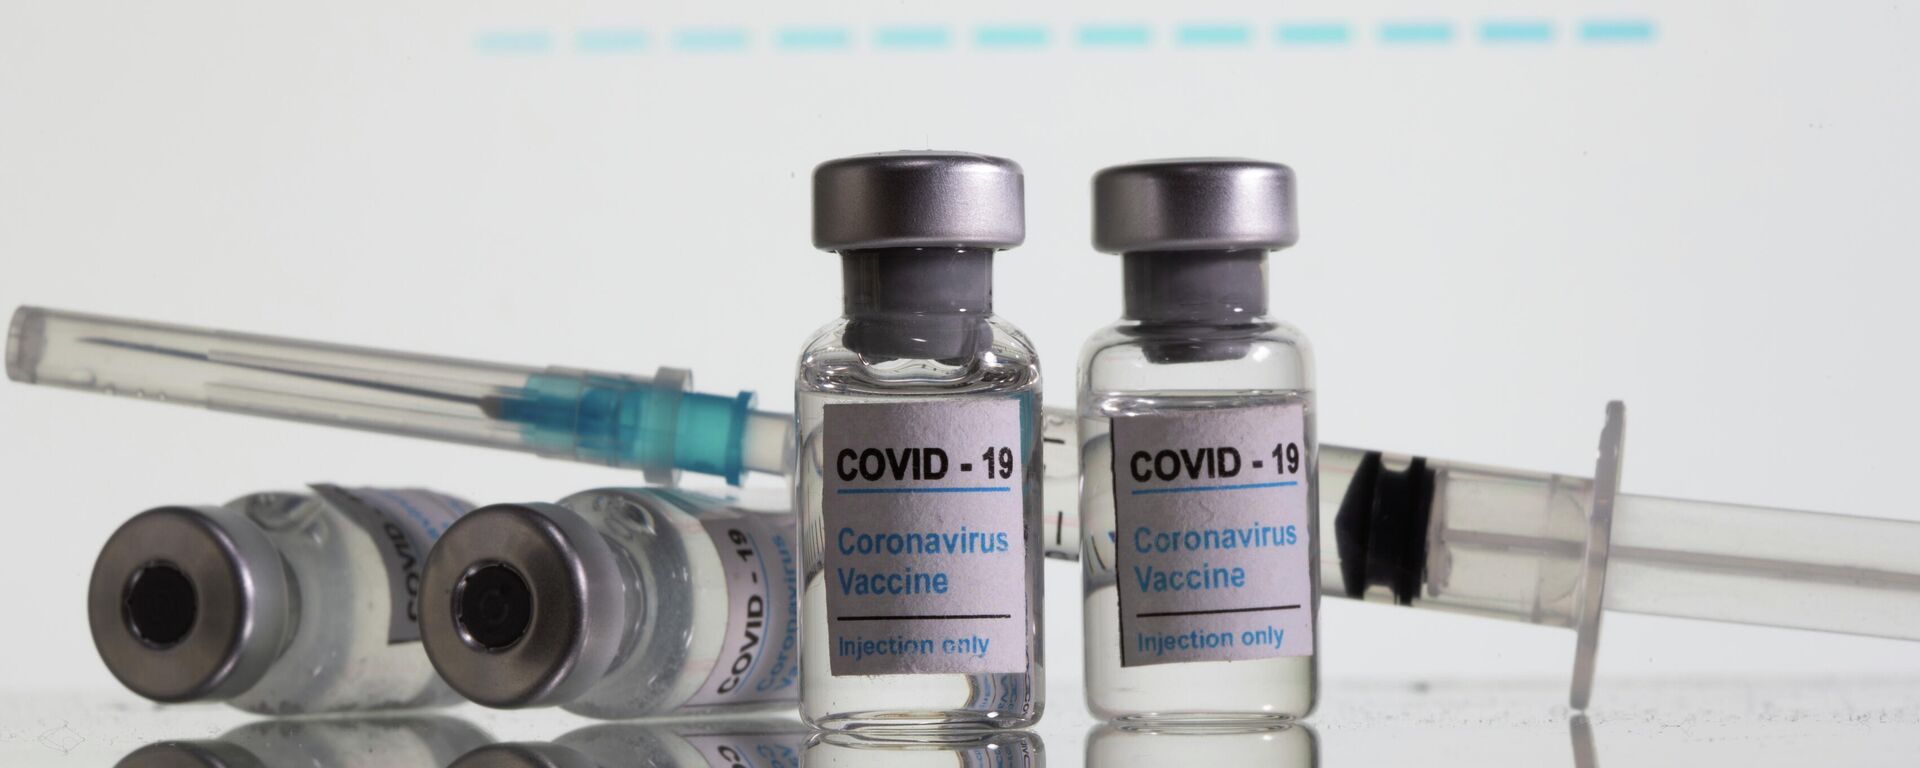 Viales de vacuna de Moderna contra el COVID-19 - Sputnik Mundo, 1920, 31.03.2021